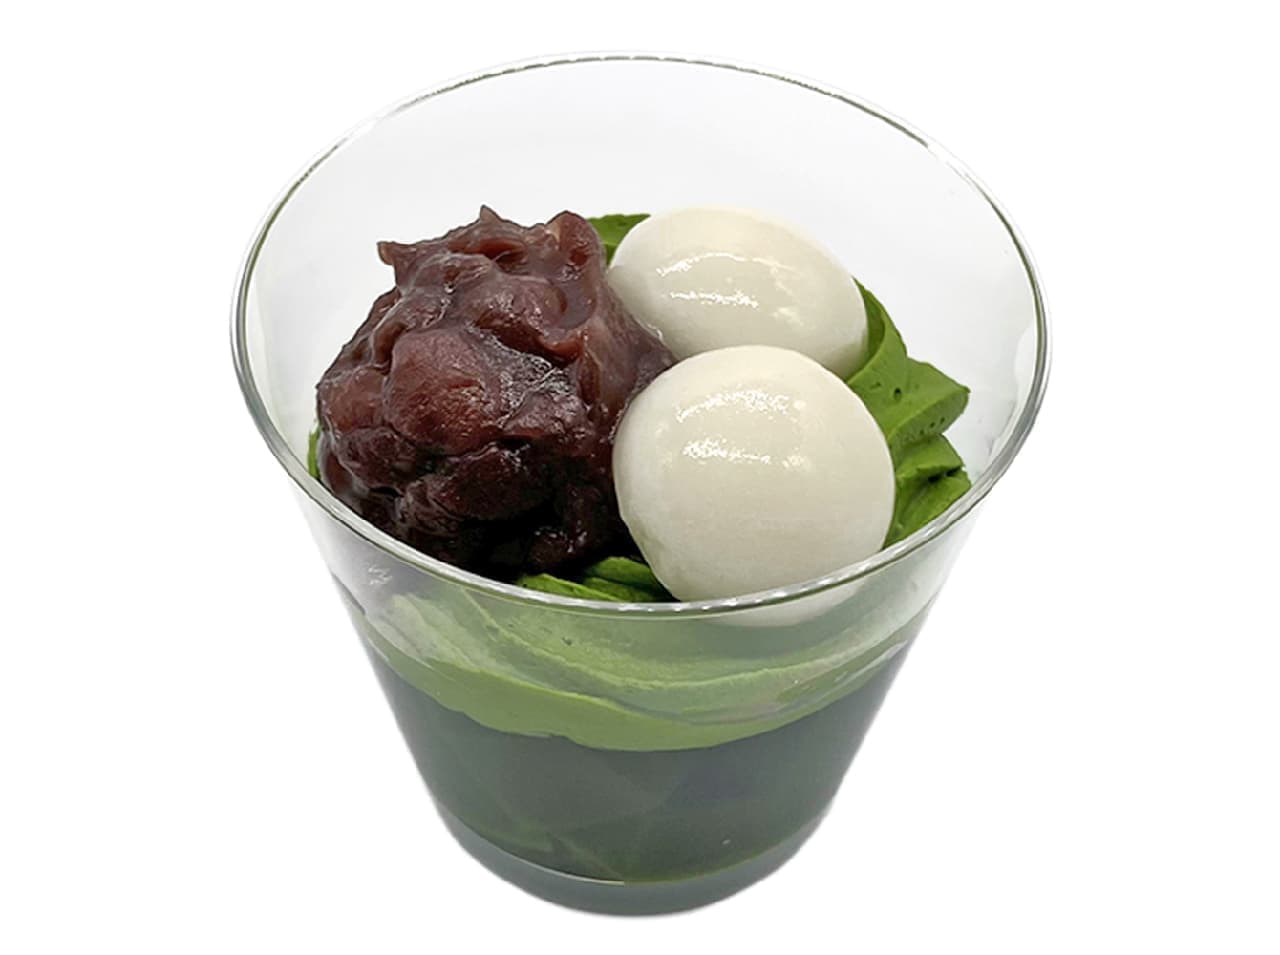 7-ELEVEN "Uji green tea jelly